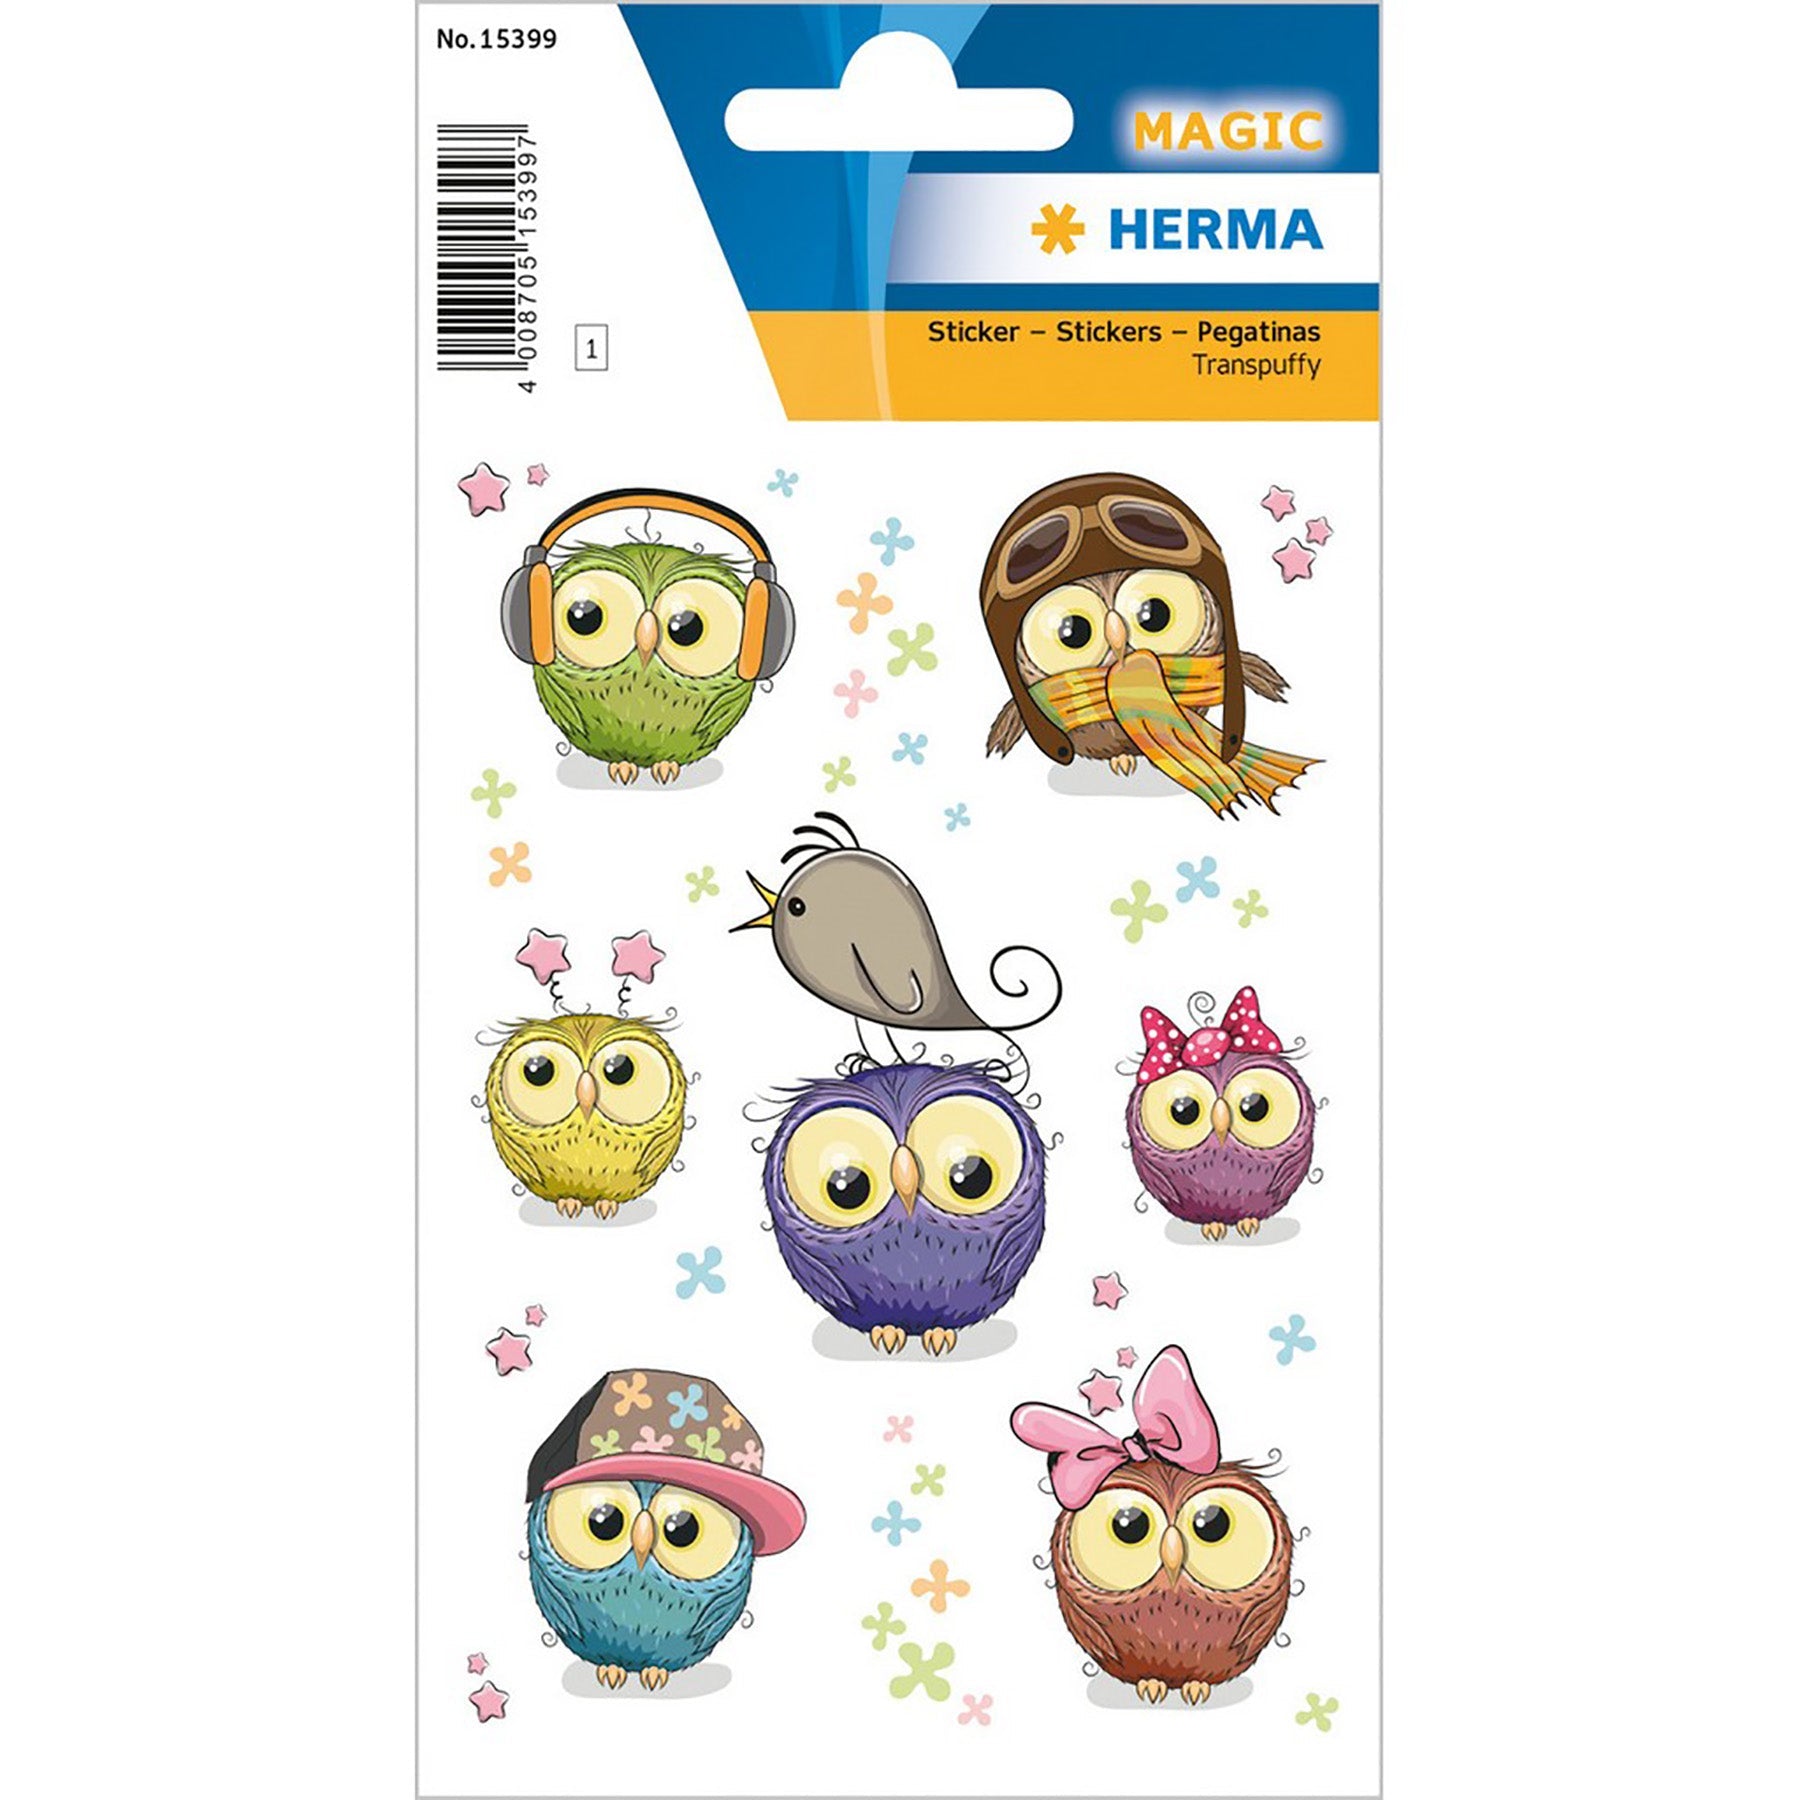 Herma Magic Stickers Cute Owls Transpuffy 4.75x3.1in Sheet